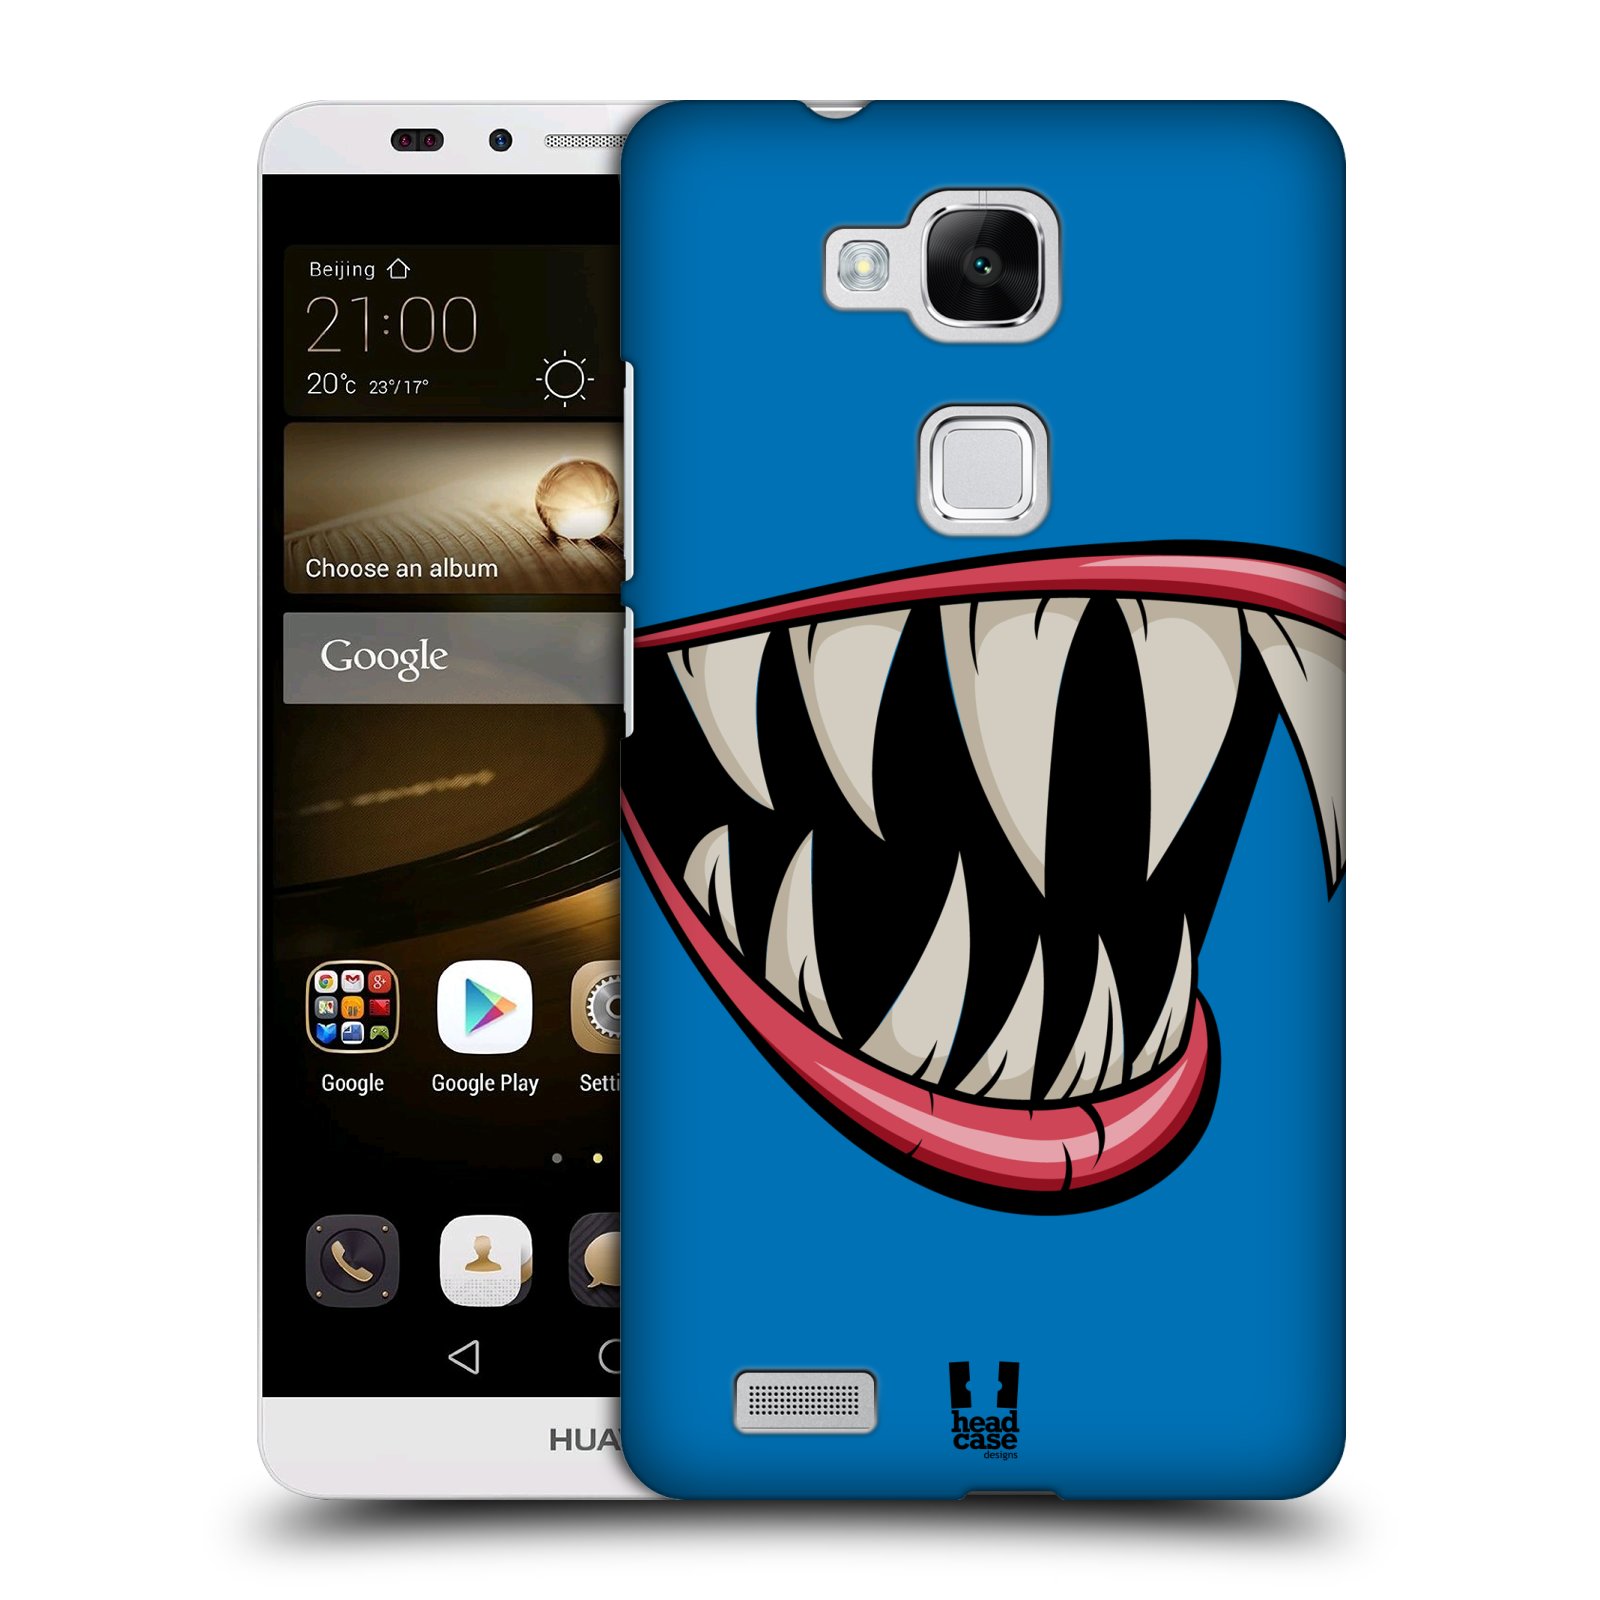 HEAD CASE plastový obal na mobil Huawei Mate 7 vzor Zvířecí úsměv ryba modrá